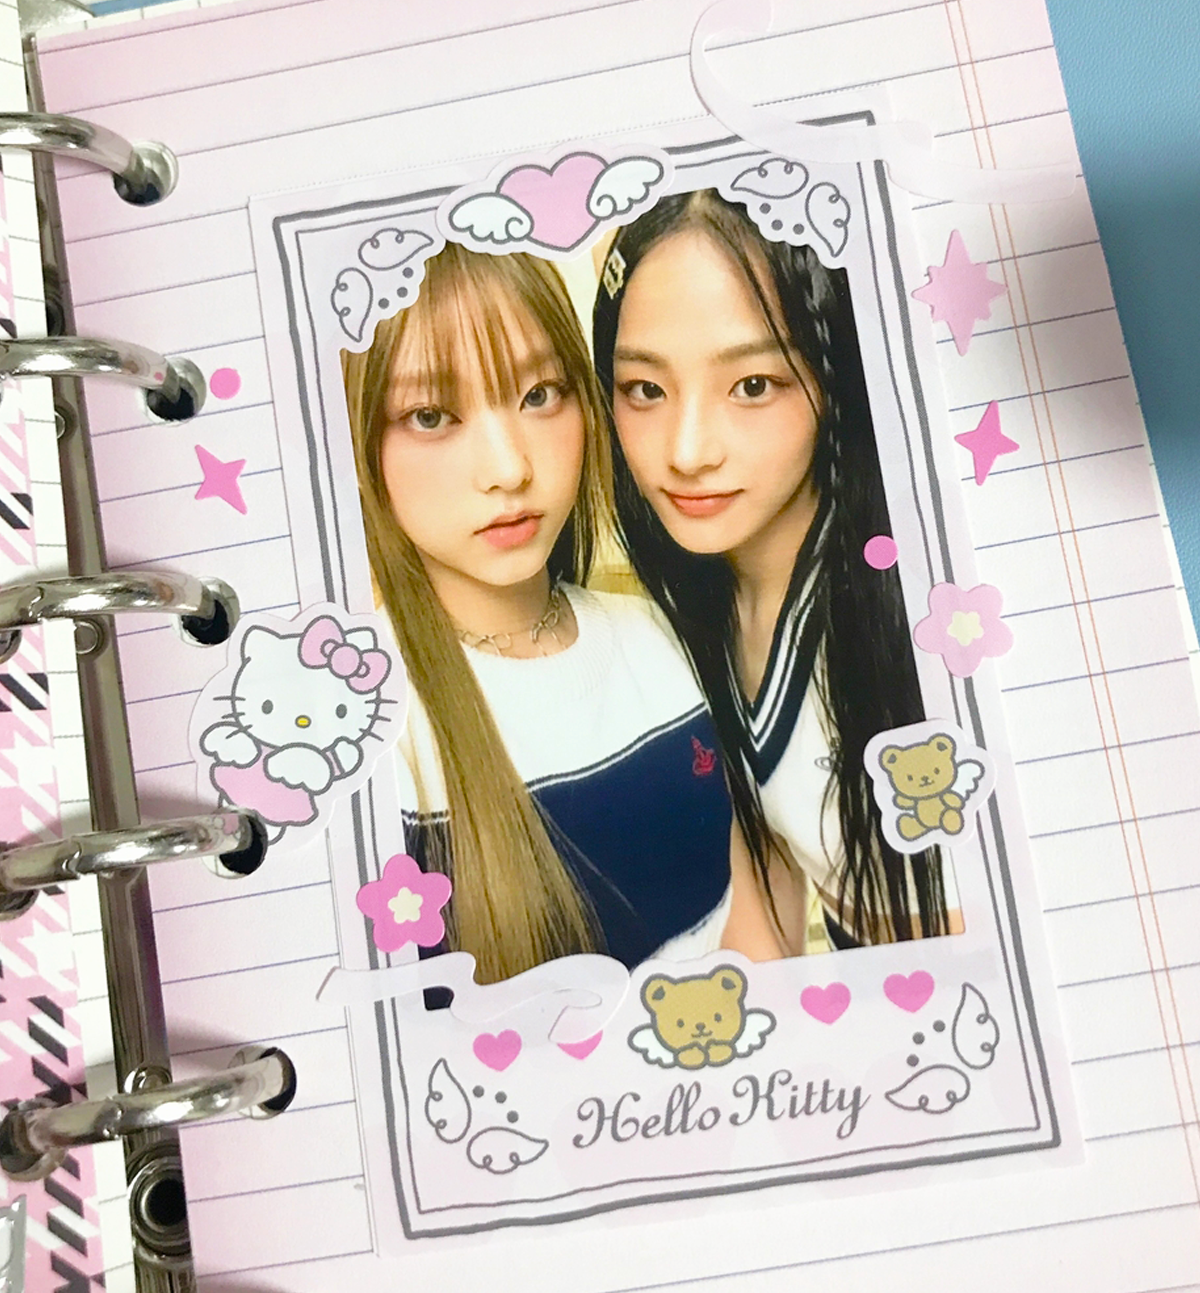 Hello Kitty Photocard Frame & Sticker [2D Retro Angel Pink]